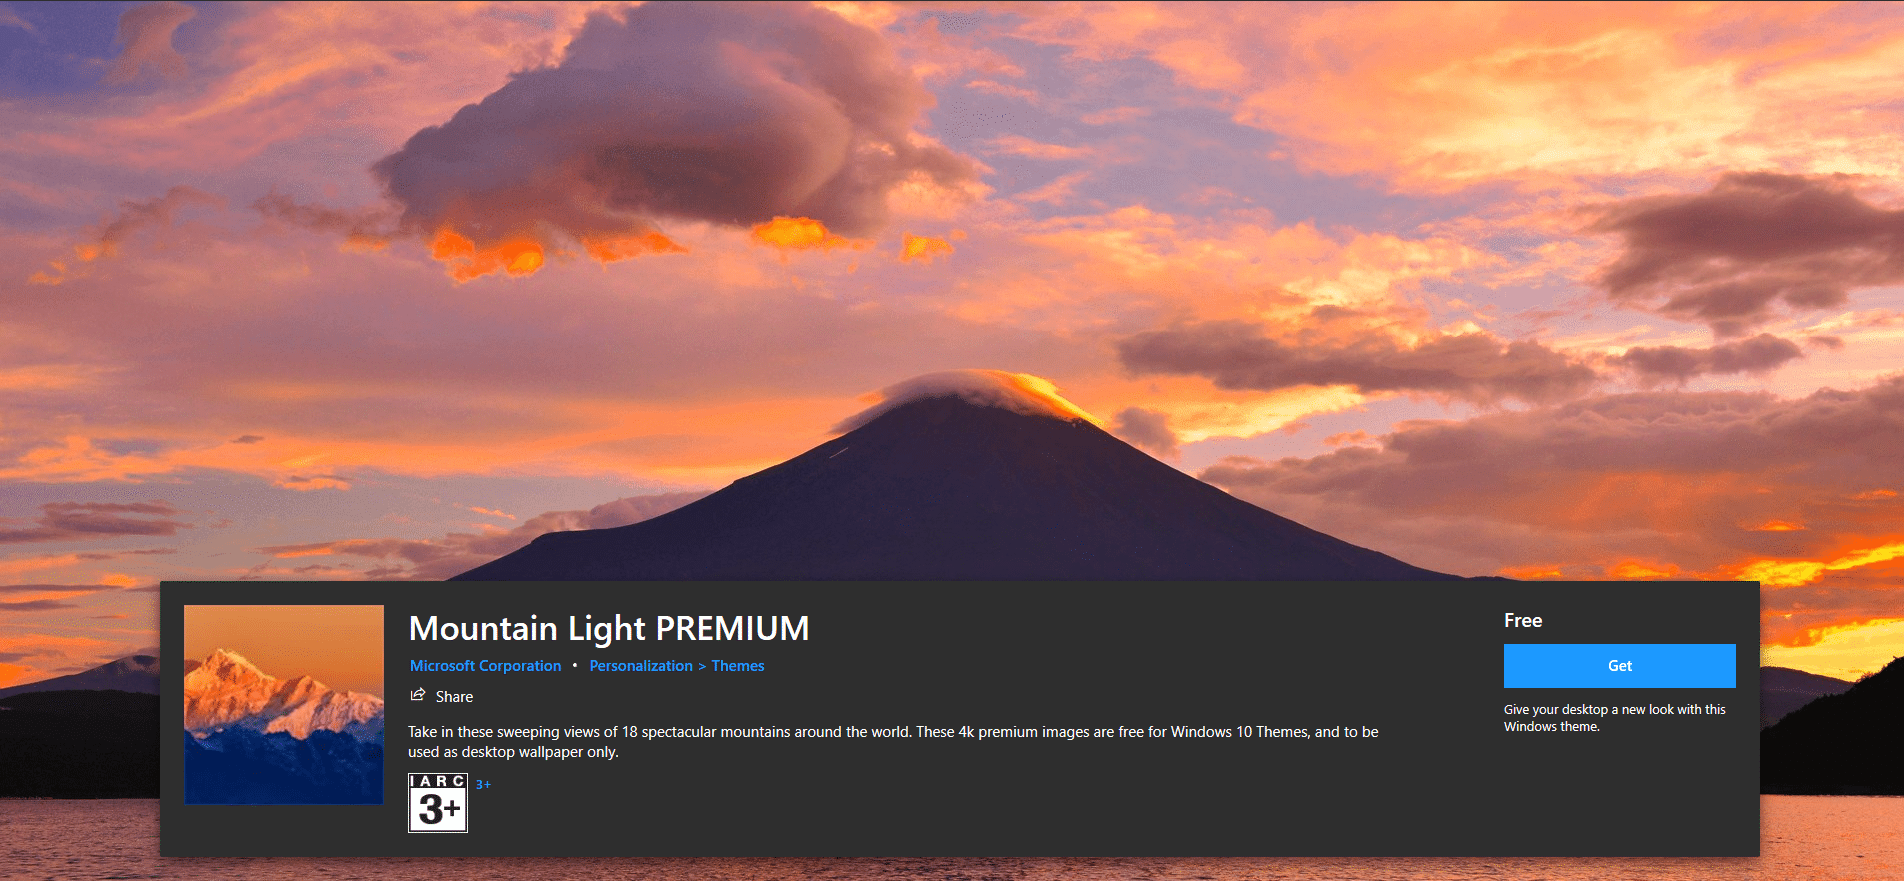 Mountain Light Premium